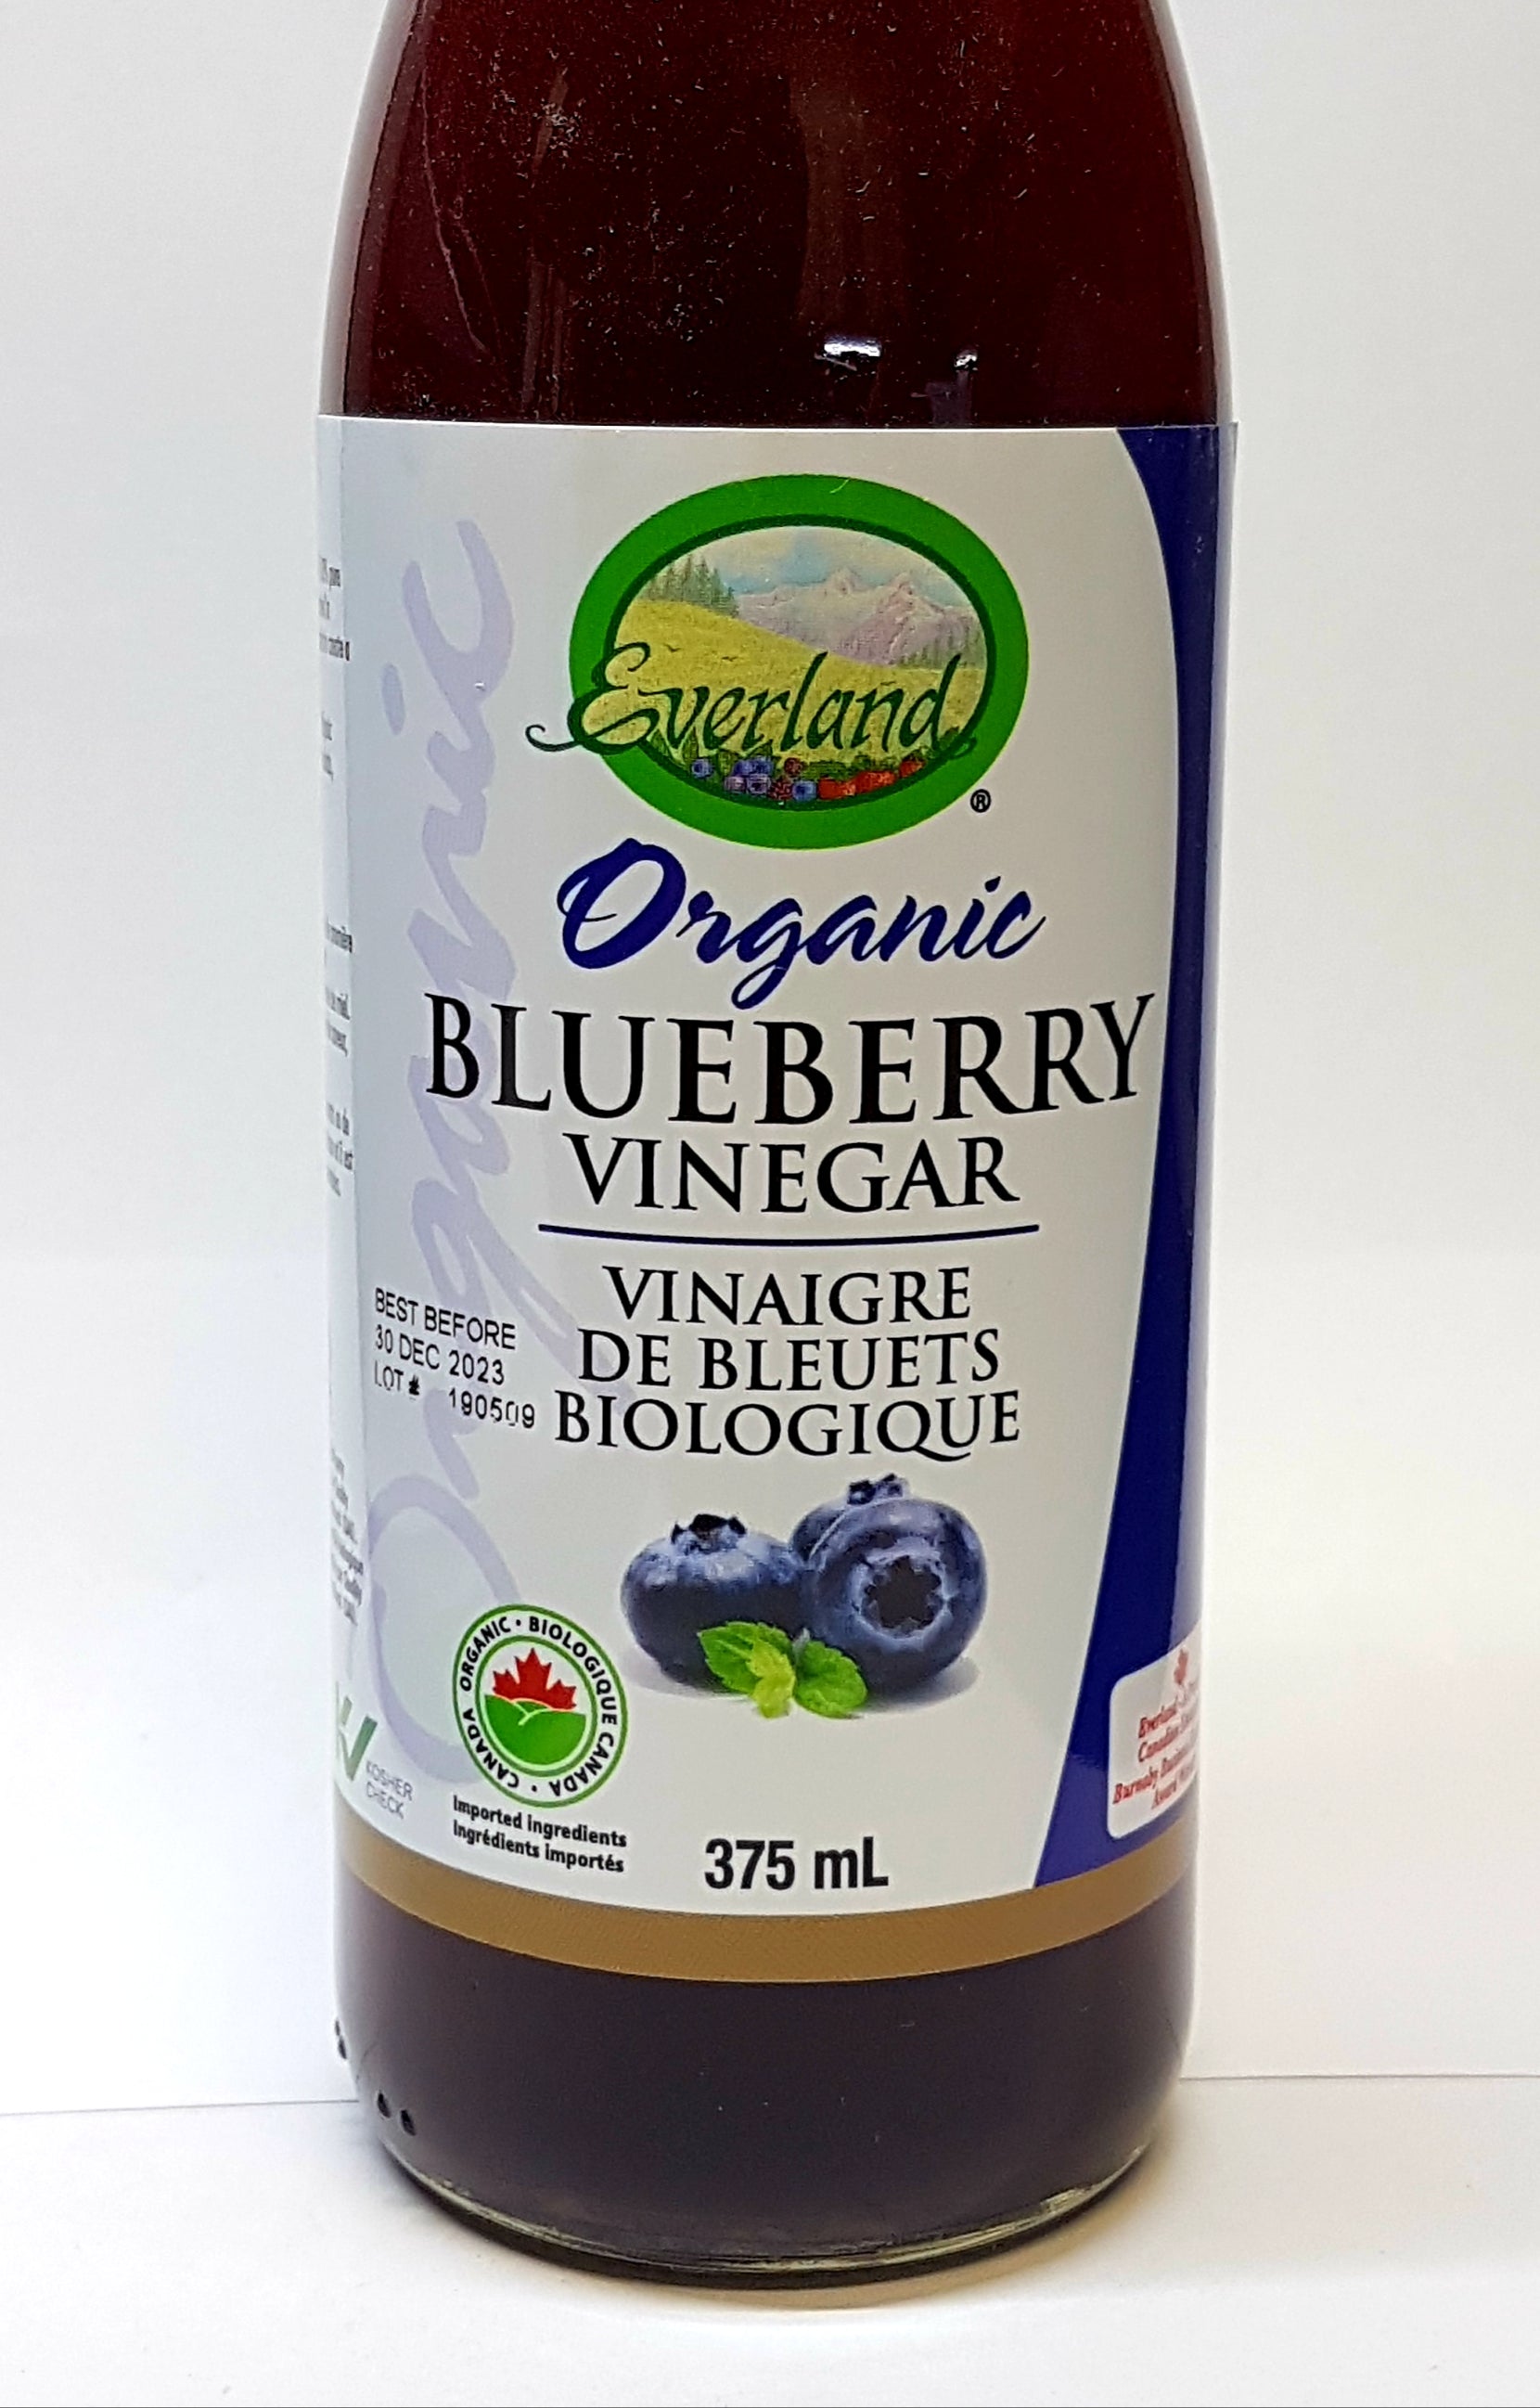 Everland Organic Blueberry Vinegar (375ml) - Lifestyle Markets